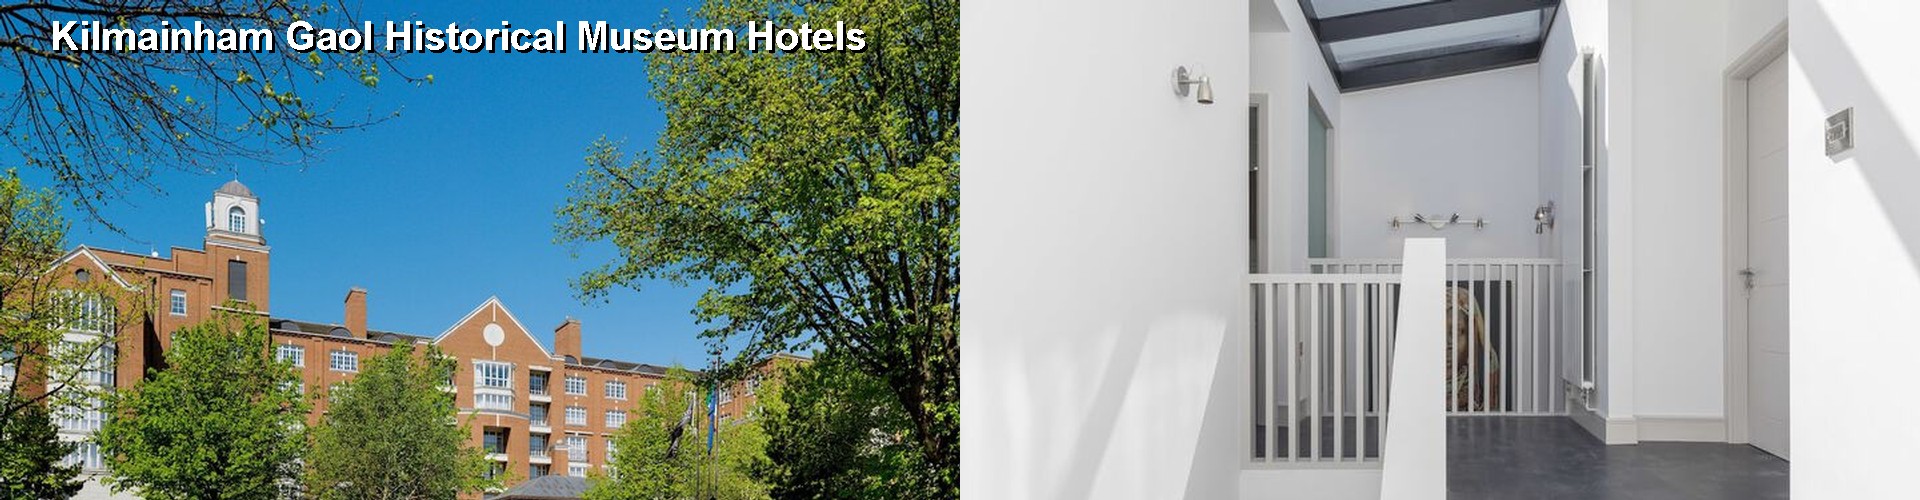 5 Best Hotels near Kilmainham Gaol Historical Museum